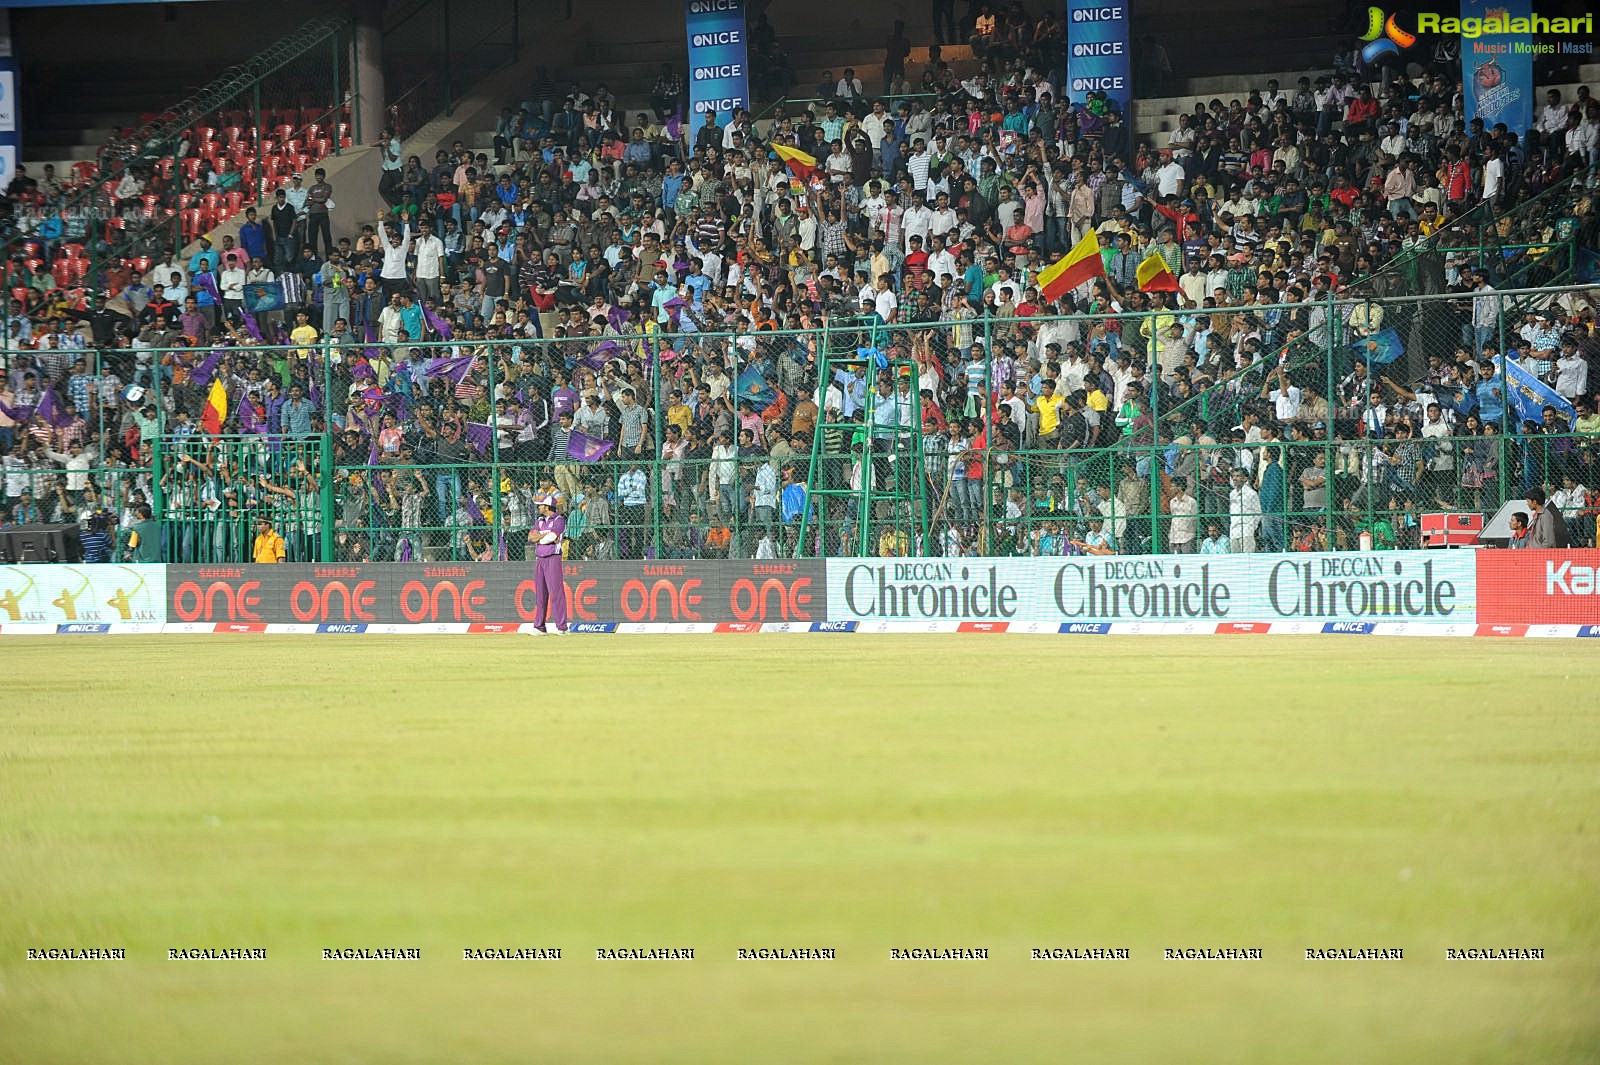 CCL 2 Bengal Tigers Vs Karnataka Bulldozers Match